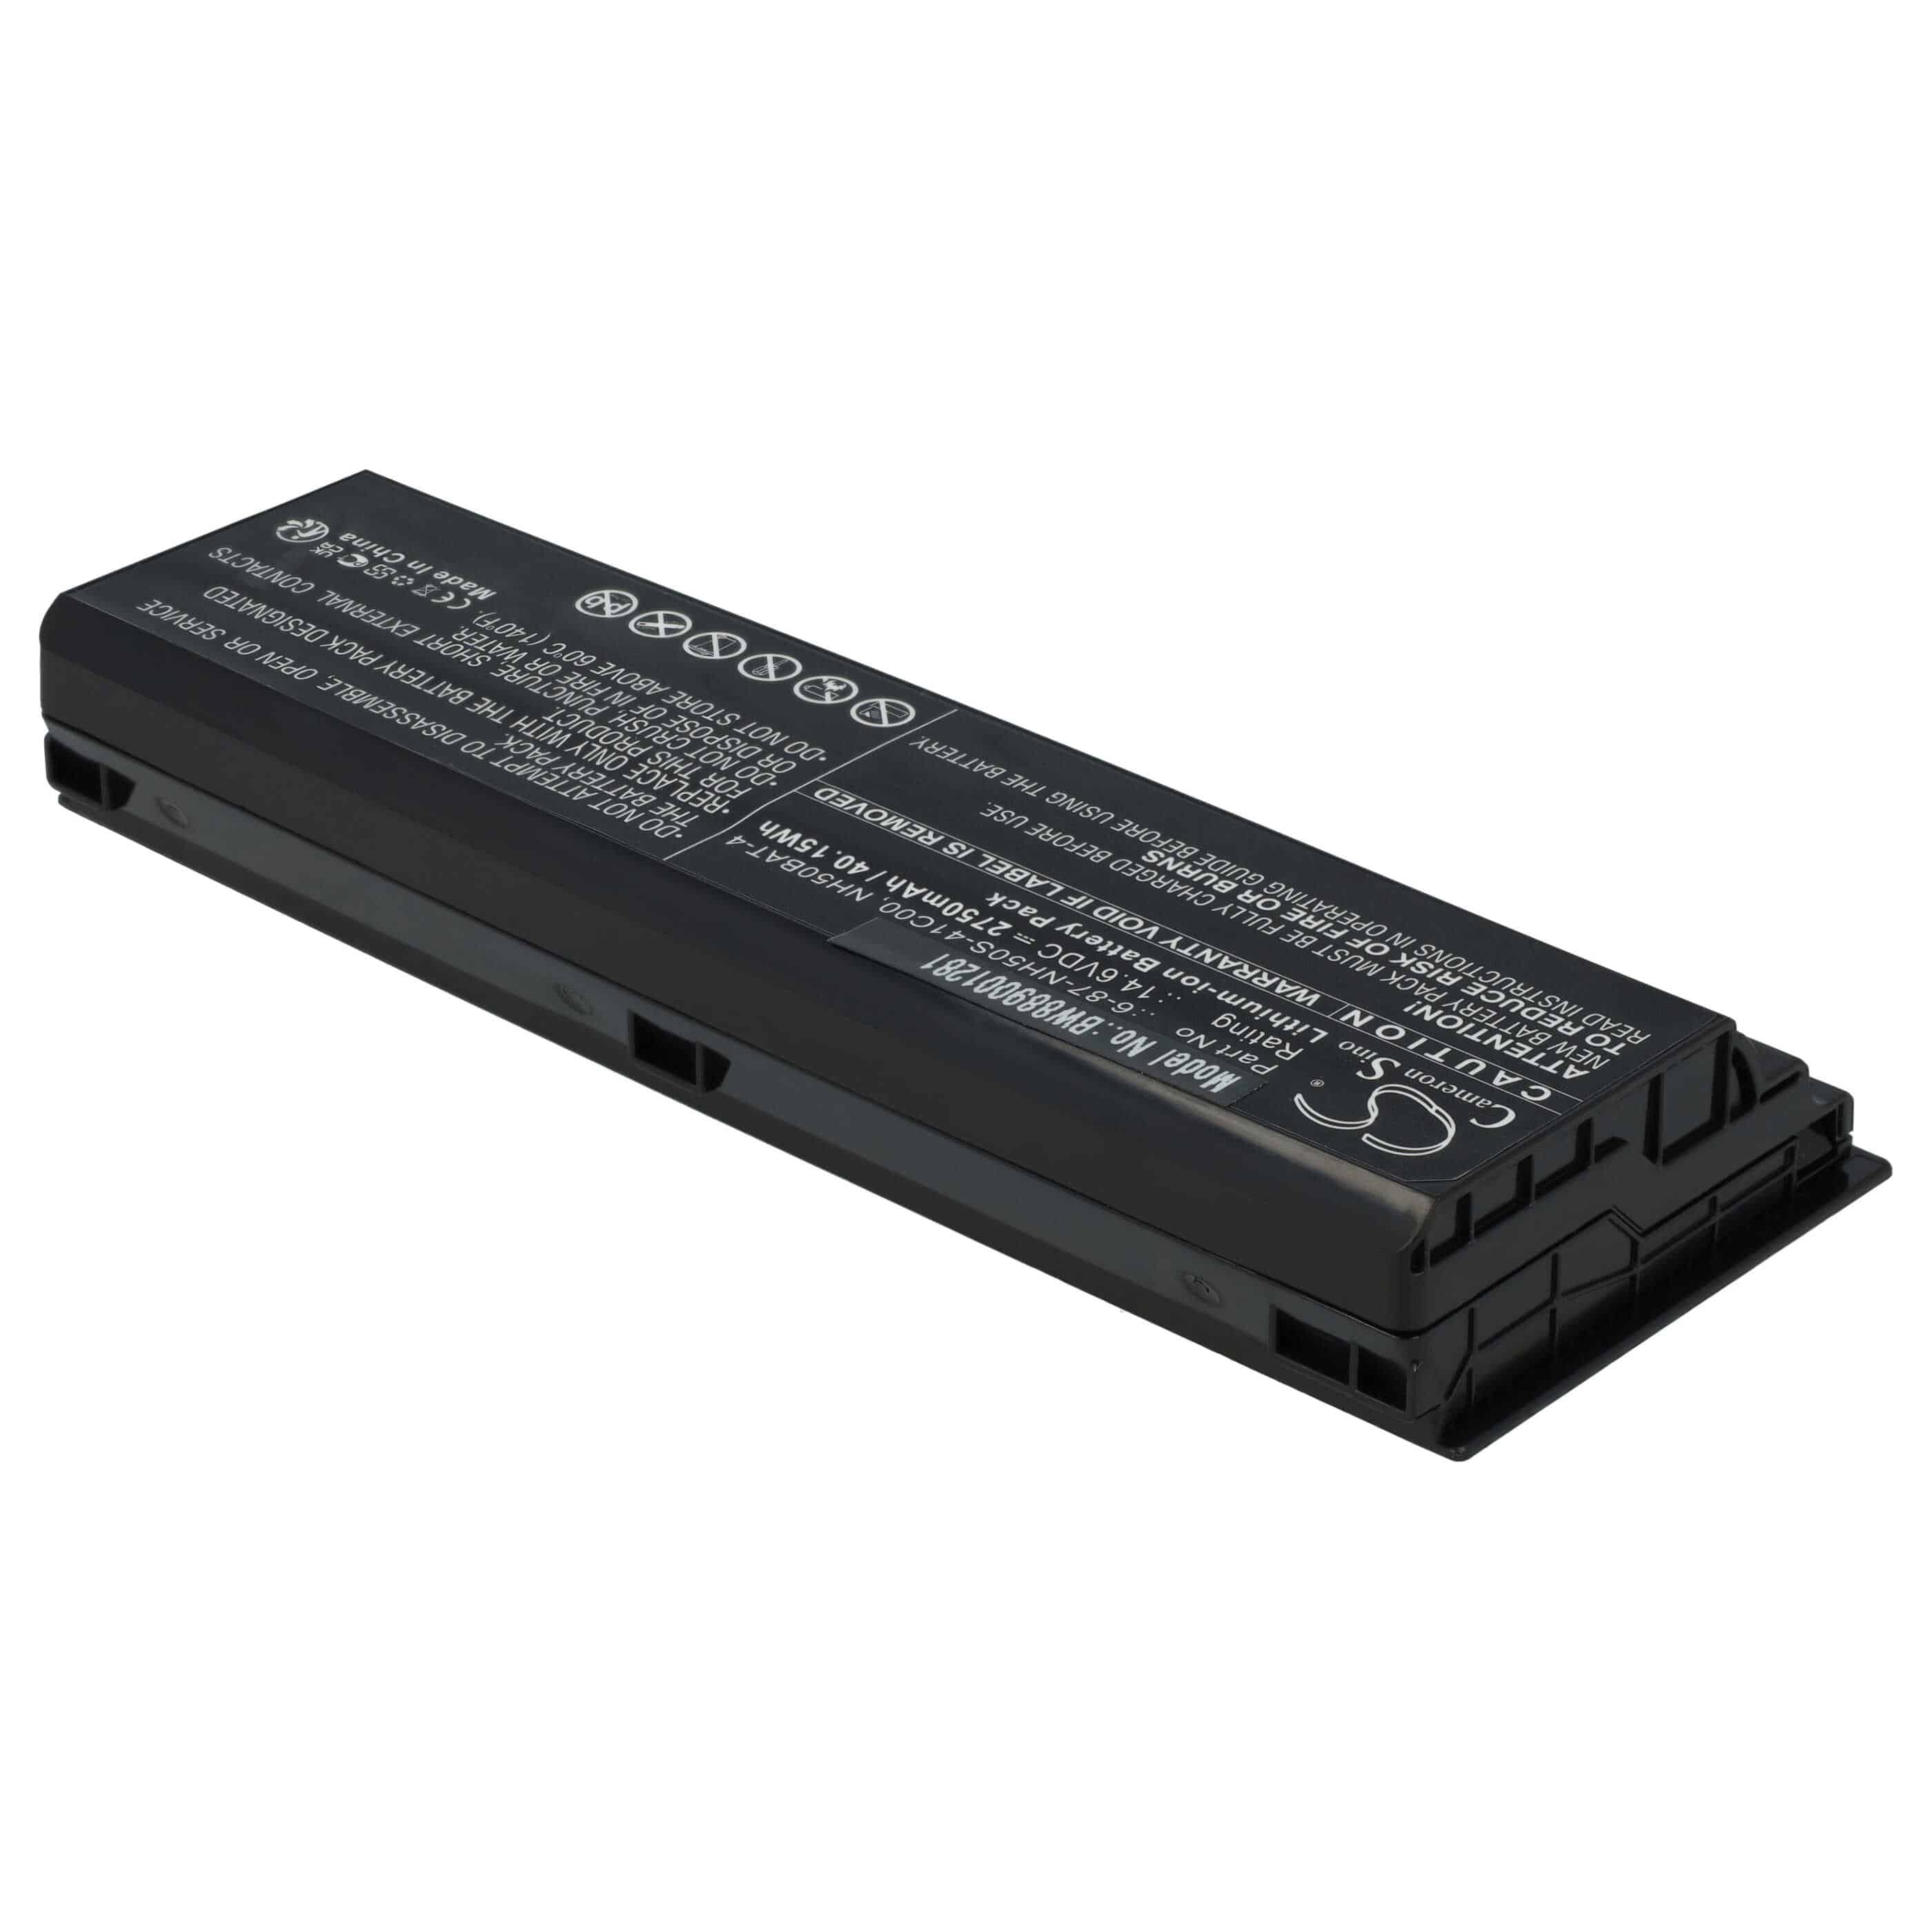 Batería reemplaza Clevo NH50BAT-4, 6-87-NH50S-41C00 para notebook Gigabyte - 2750 mAh 14,6 V Li-Ion